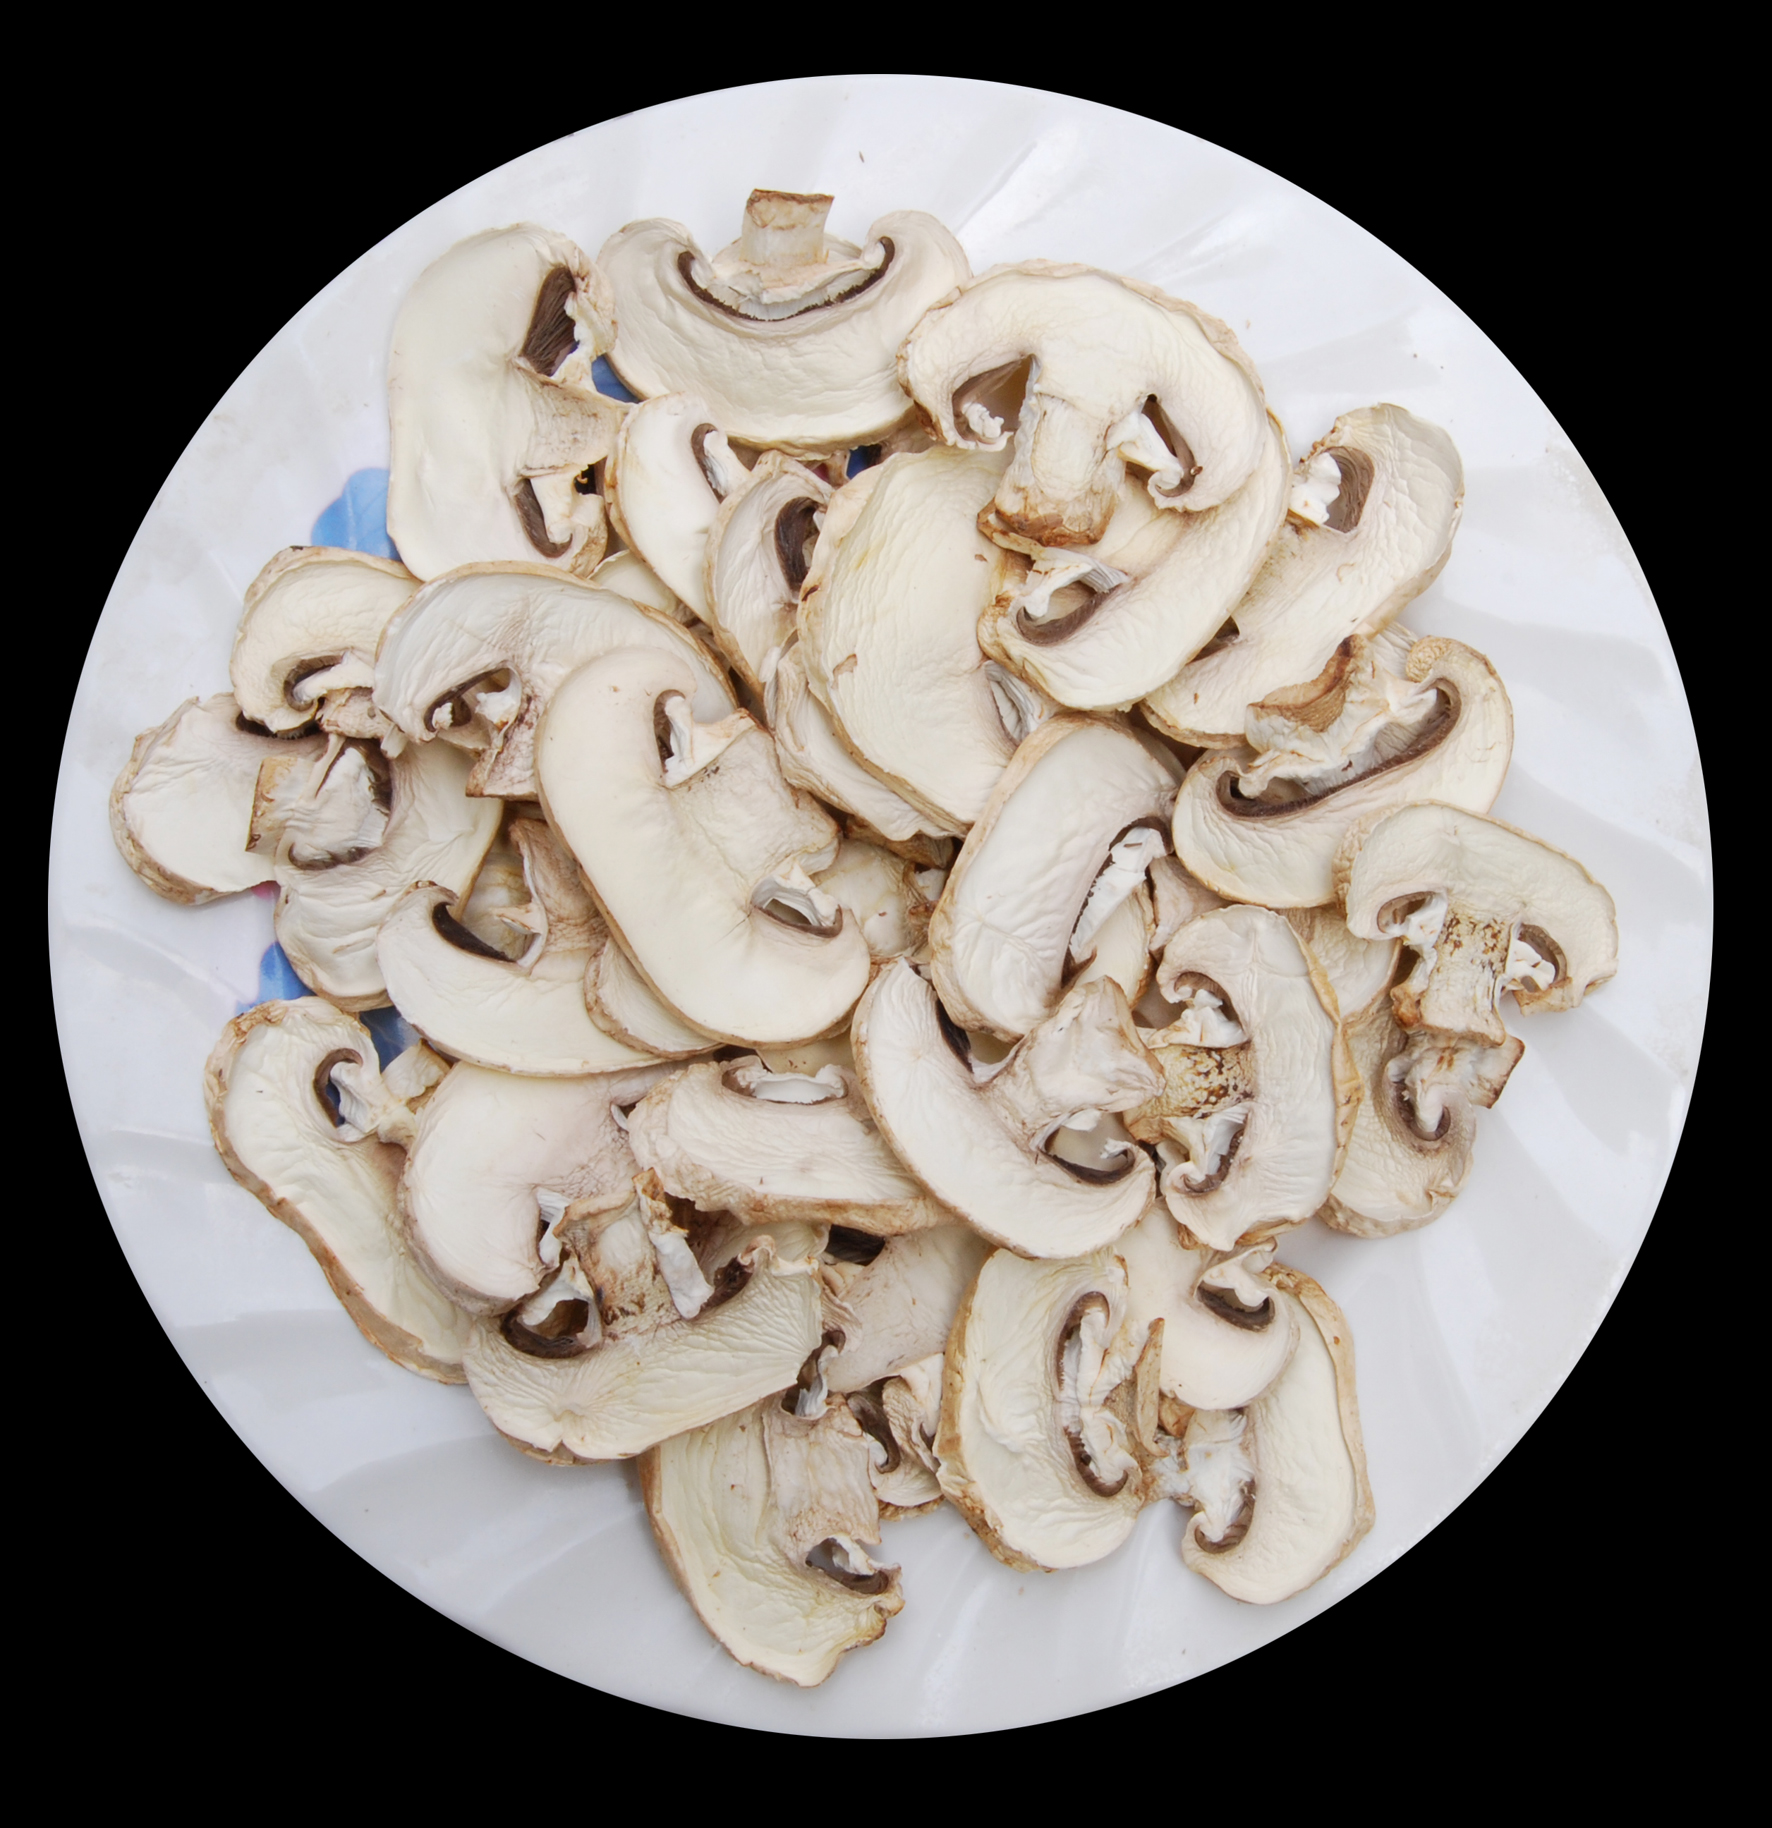 Dehydrated champignon mushroom slices